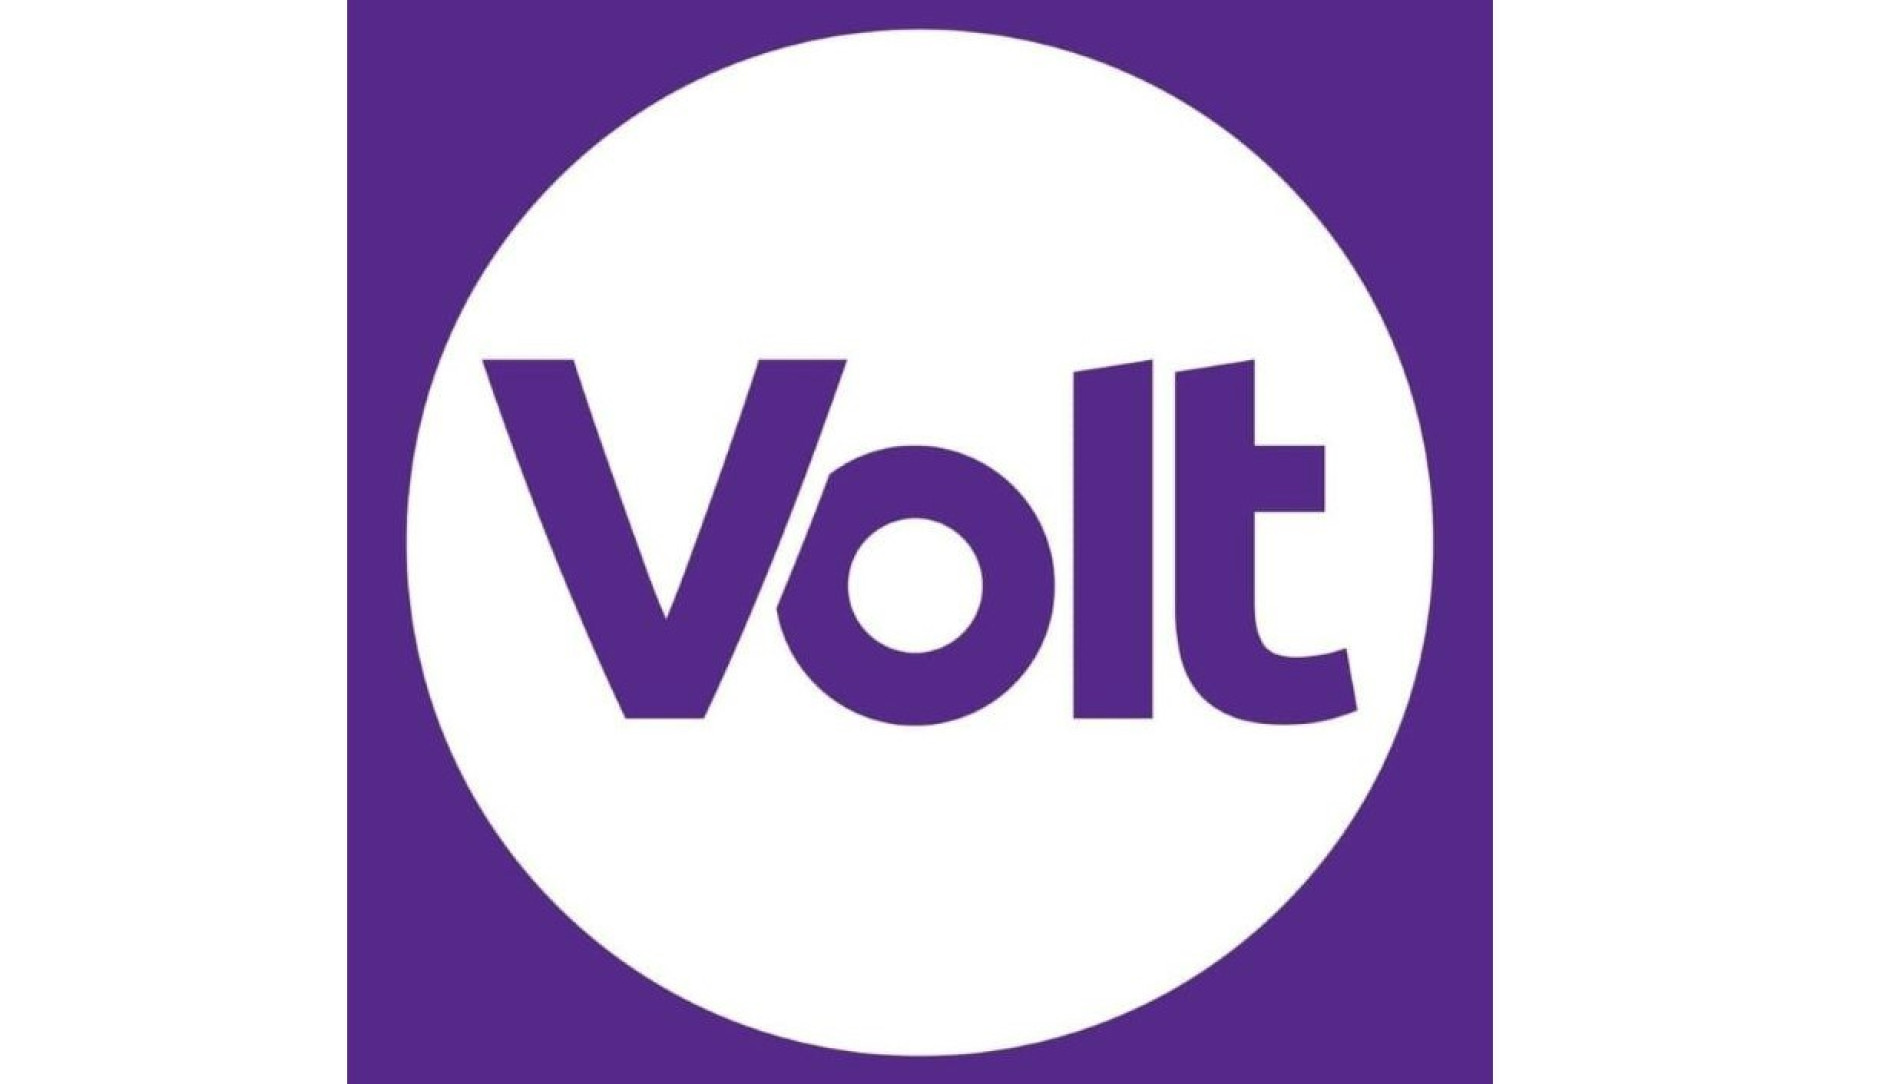 The Volt logo.